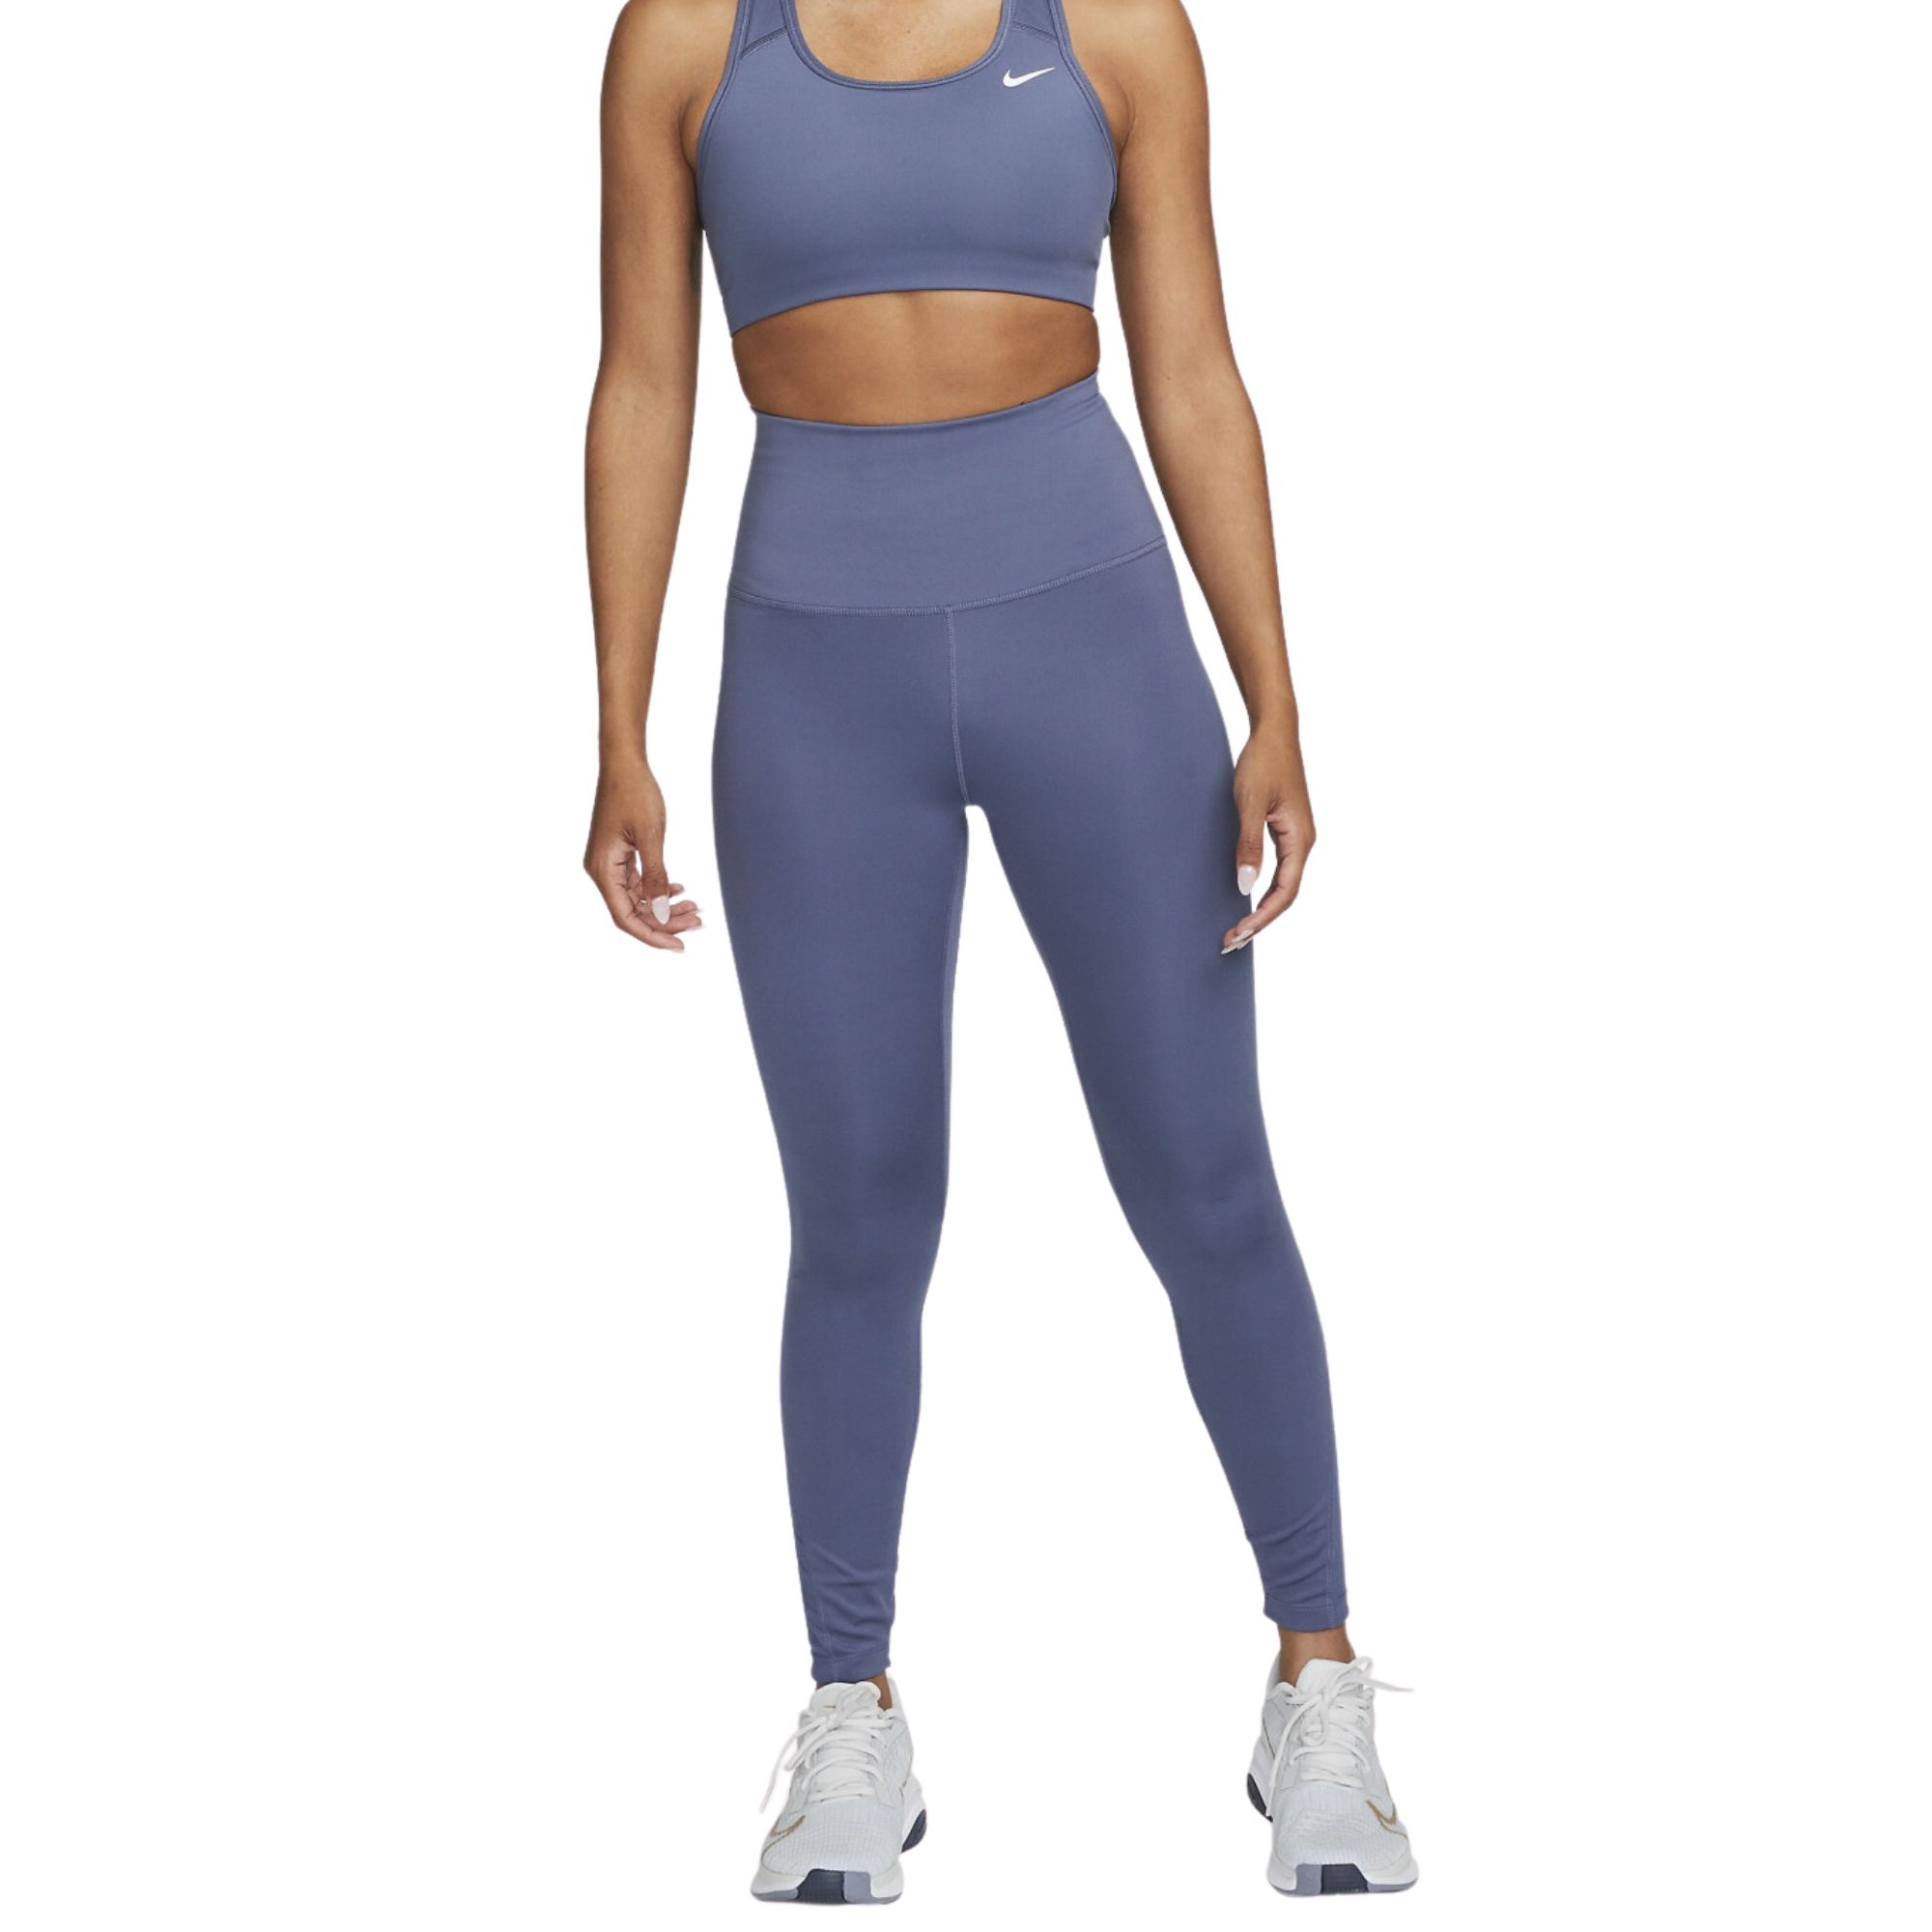 Buy Nike Dri-Fit One MR Tight Women Blue online